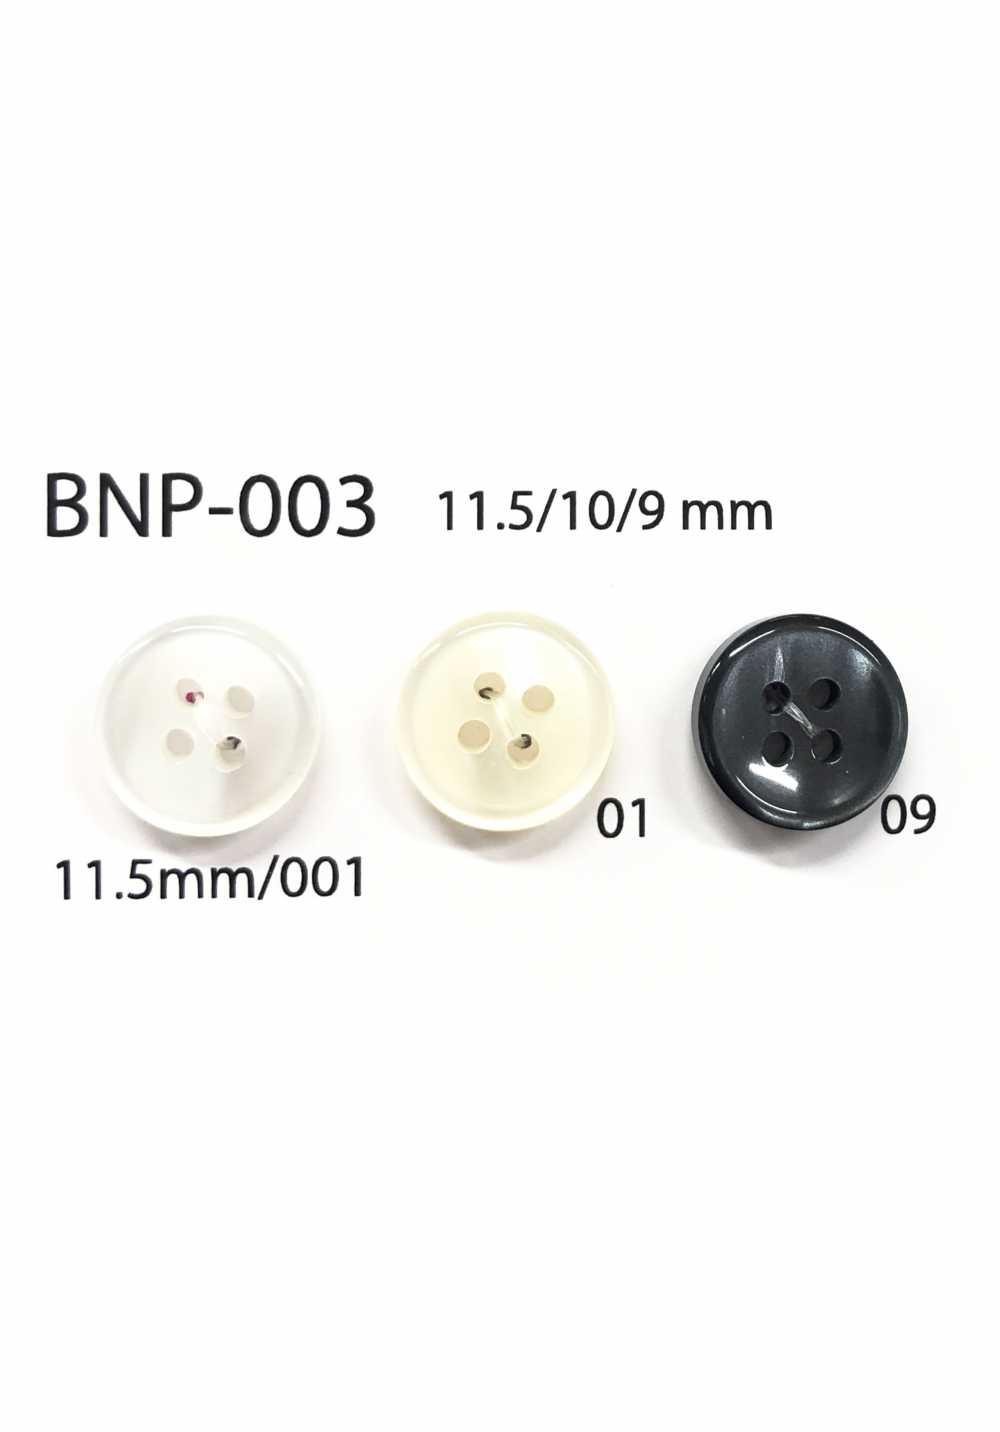 BNP-003 聚酯纤维四孔纽扣 爱丽丝纽扣